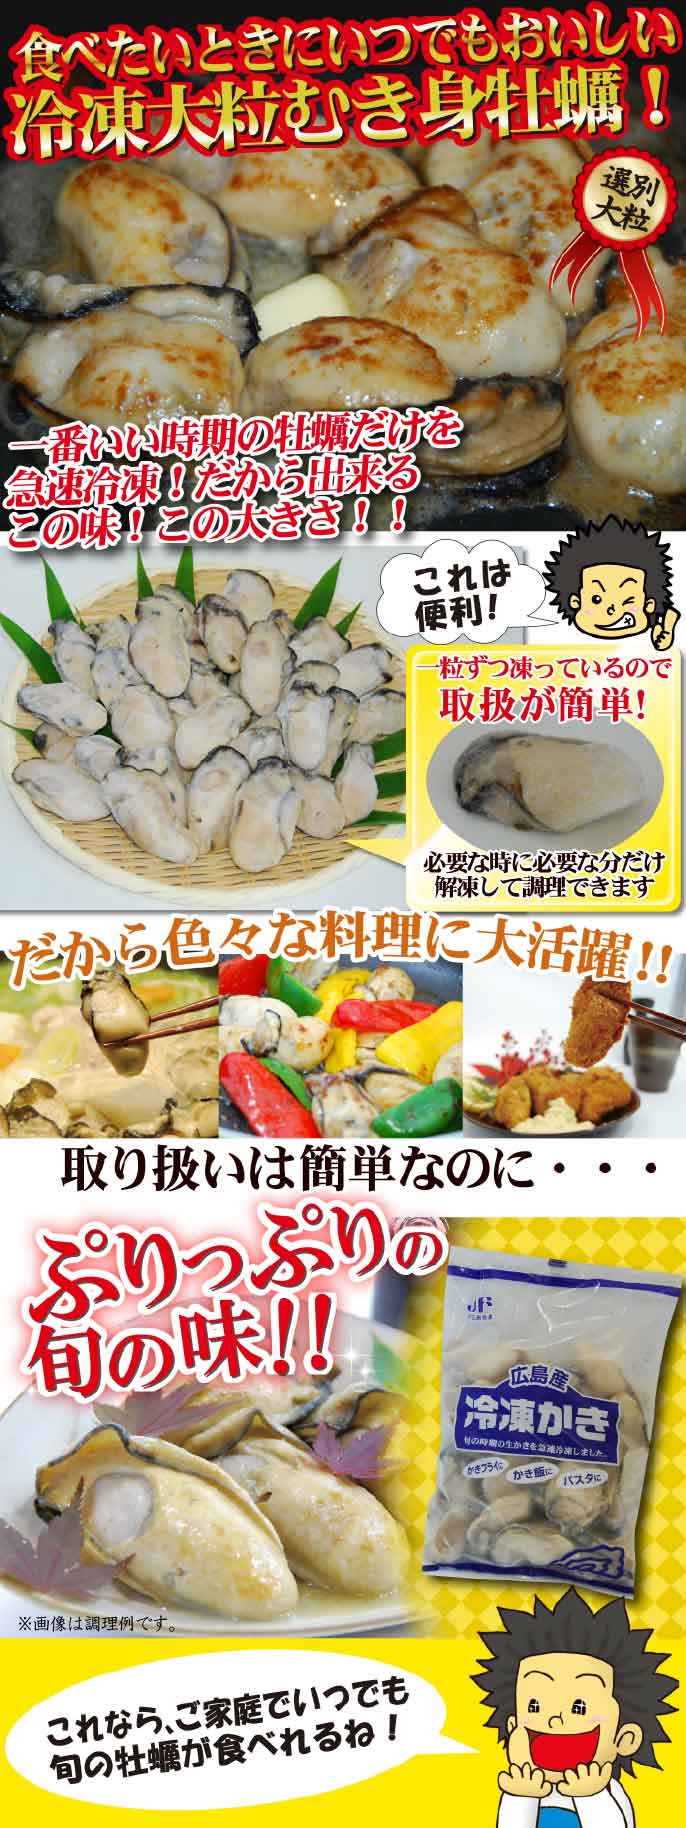 広島産厳選 冷凍中粒むき身牡蠣